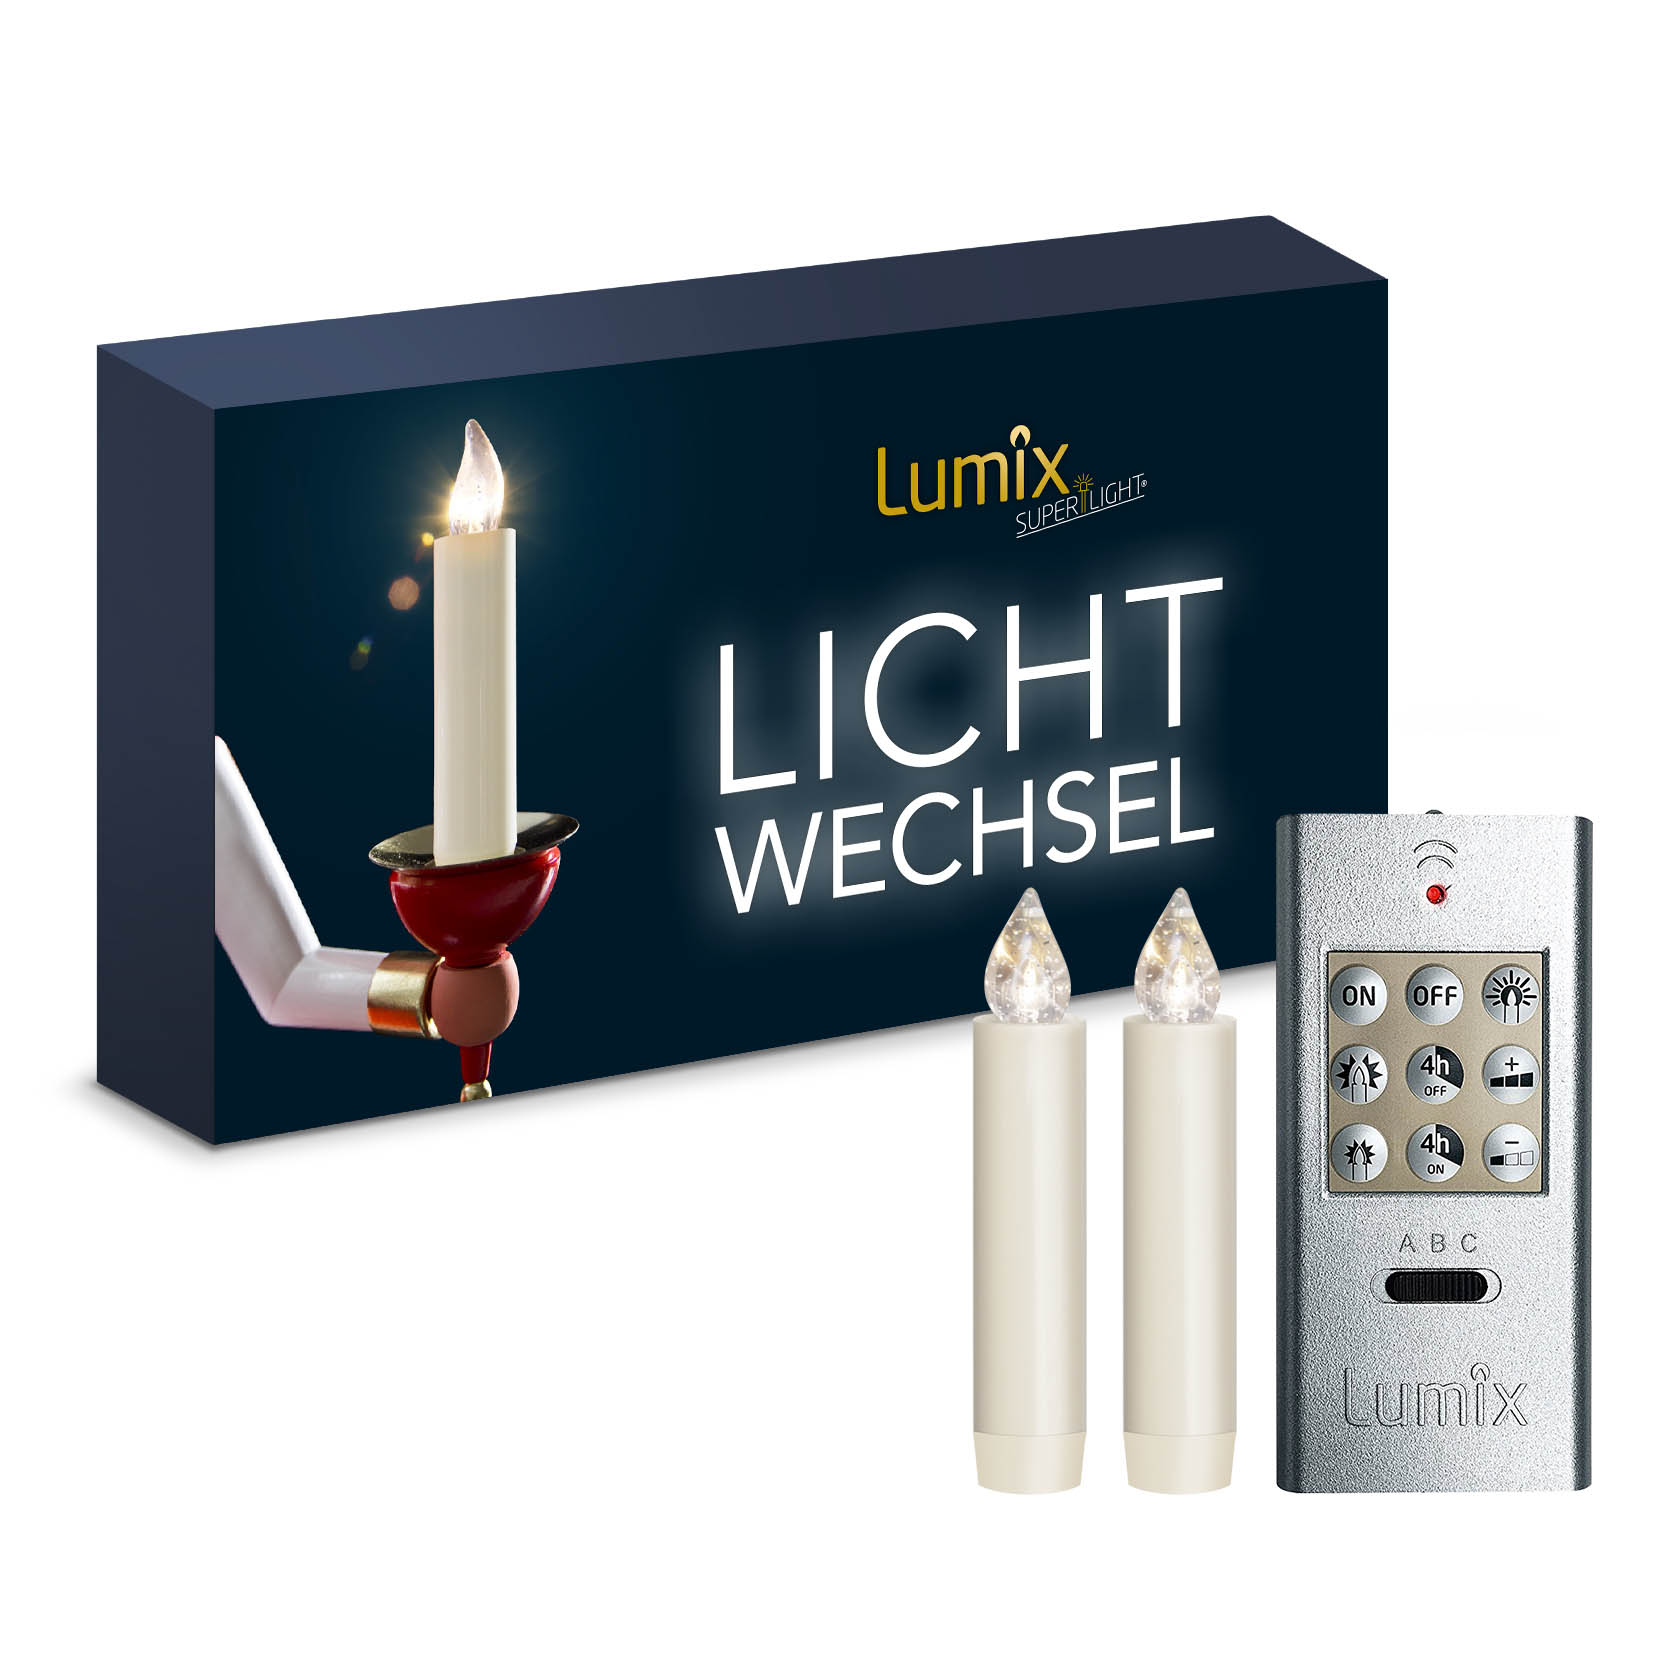 LUMIX CLASSIC MINI S,-Superlight- Basis 2 Kerzen, 1 Fernbedienung inkl.Batterien -NEU- im Dregeno Online Shop günstig kaufen